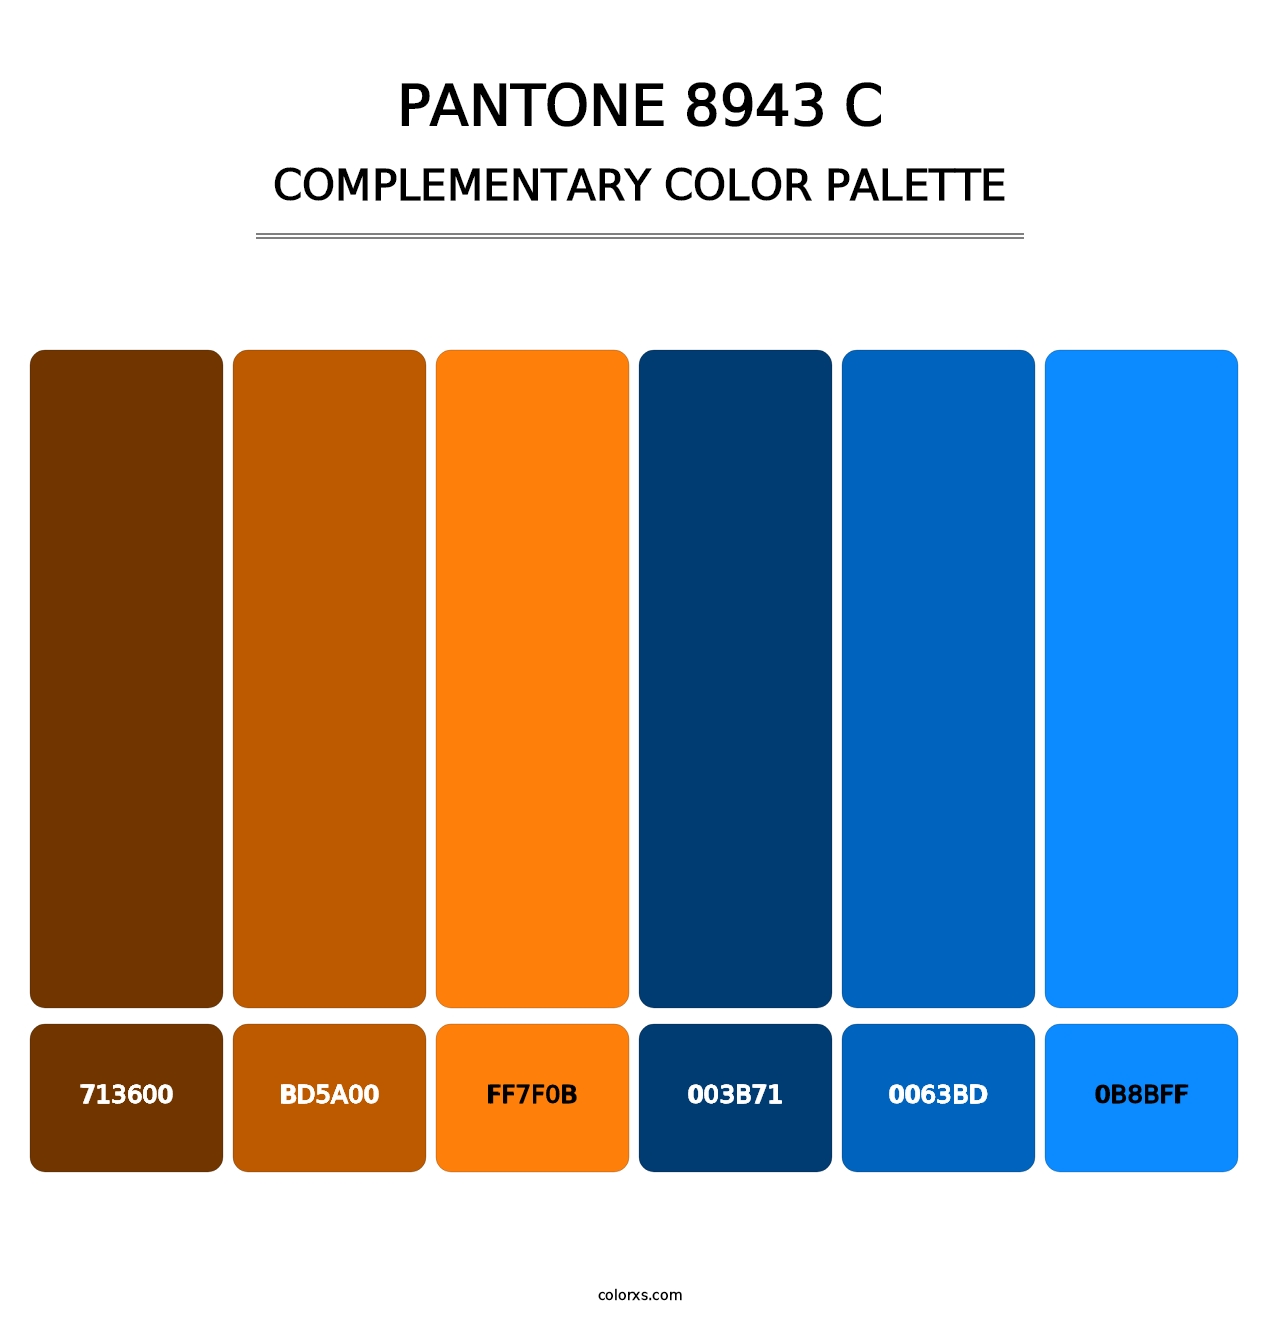 PANTONE 8943 C - Complementary Color Palette